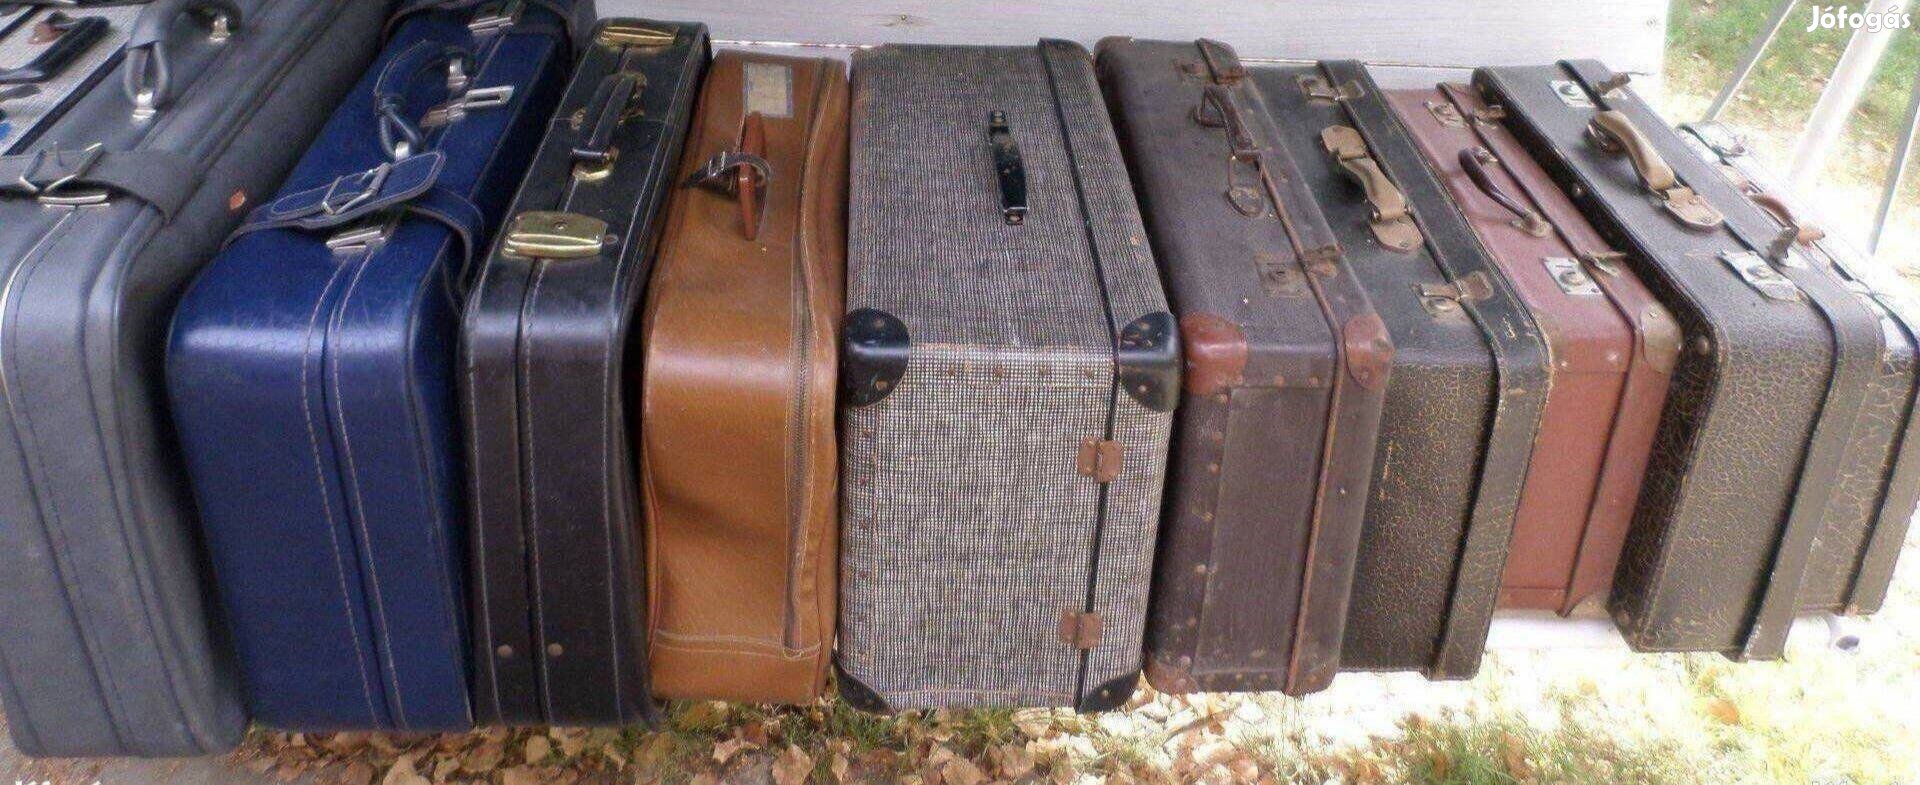 Retro bőrönd koffer gyűjtemény